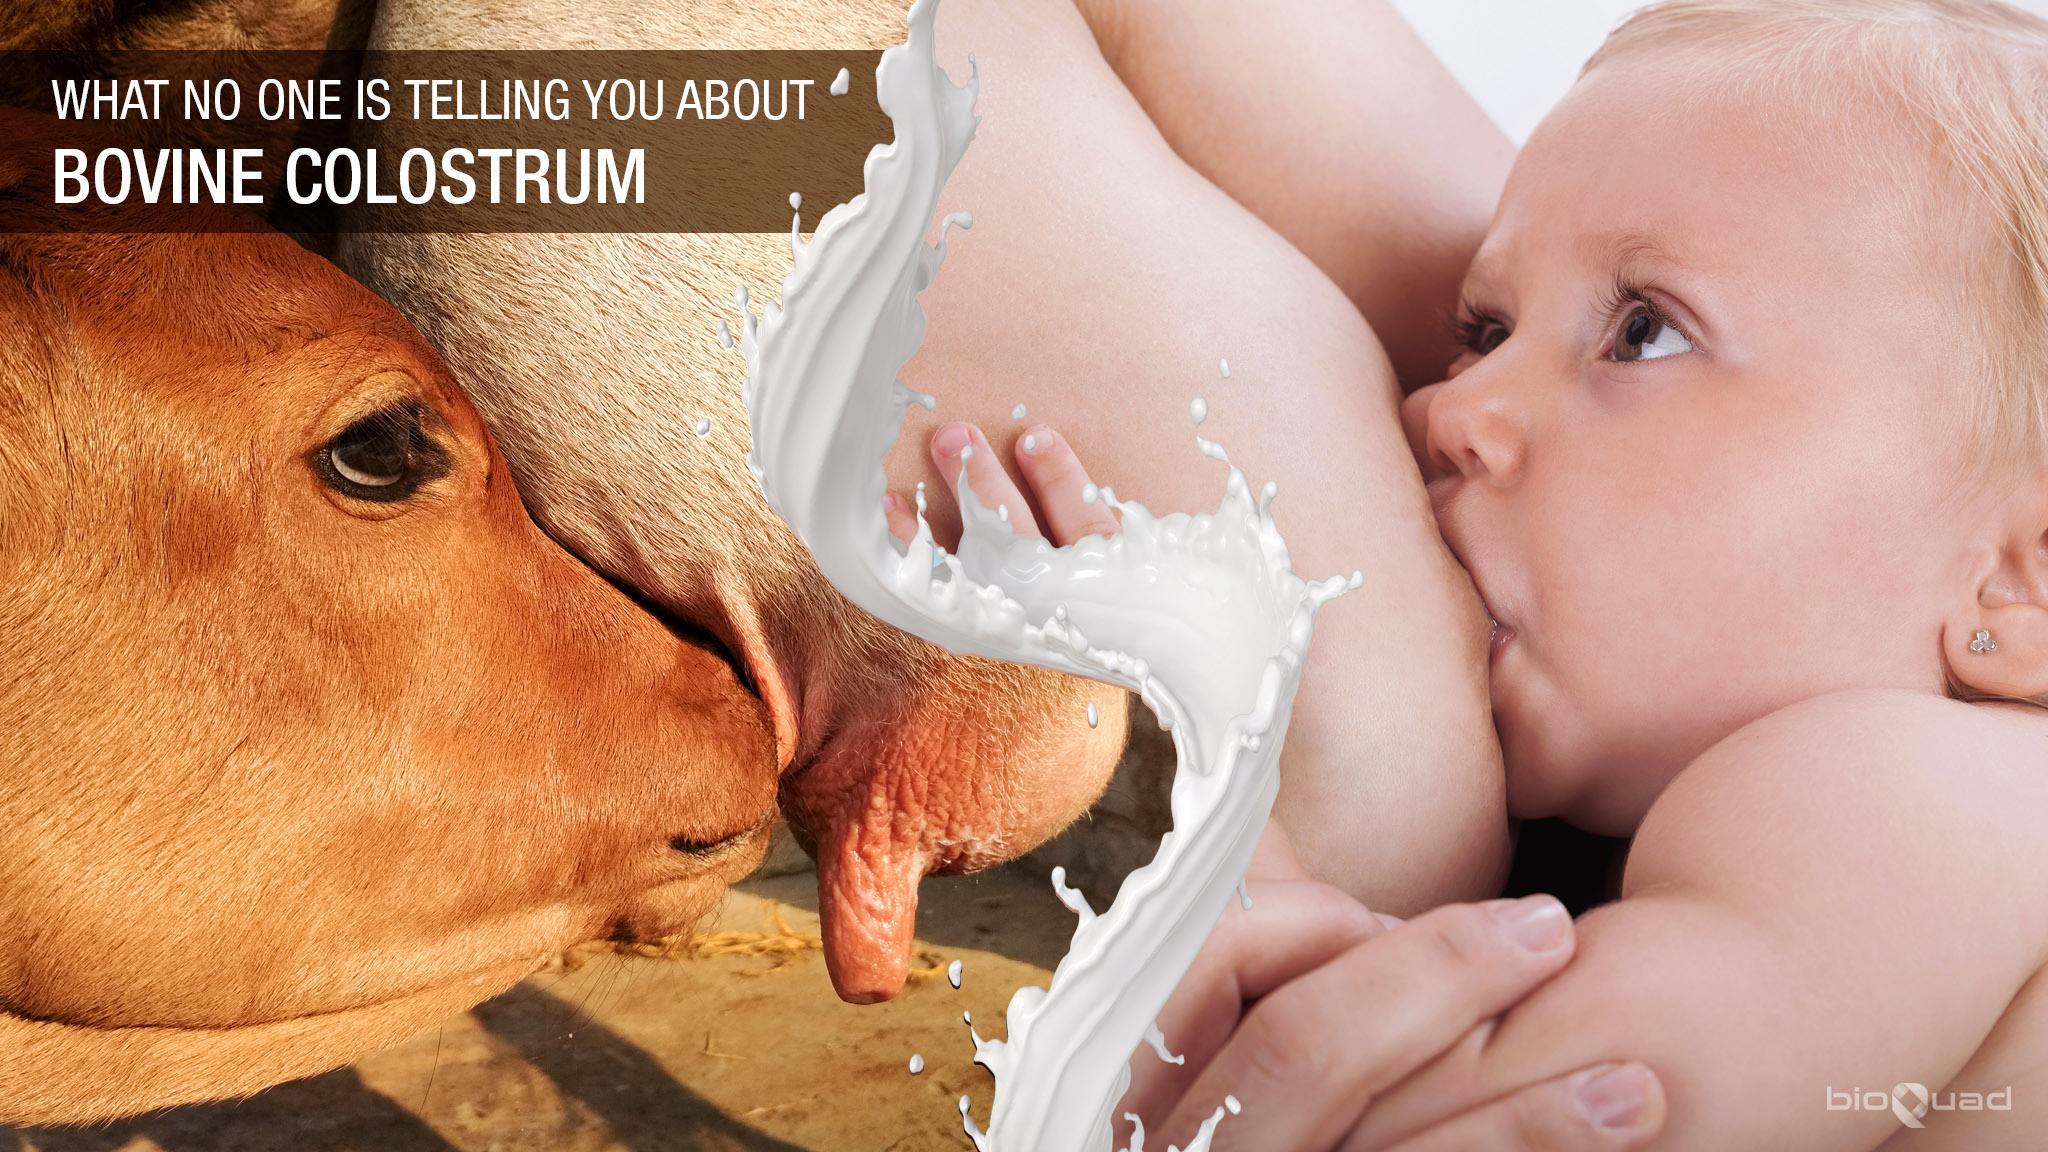 bioQuad human baby and cow calf nursing